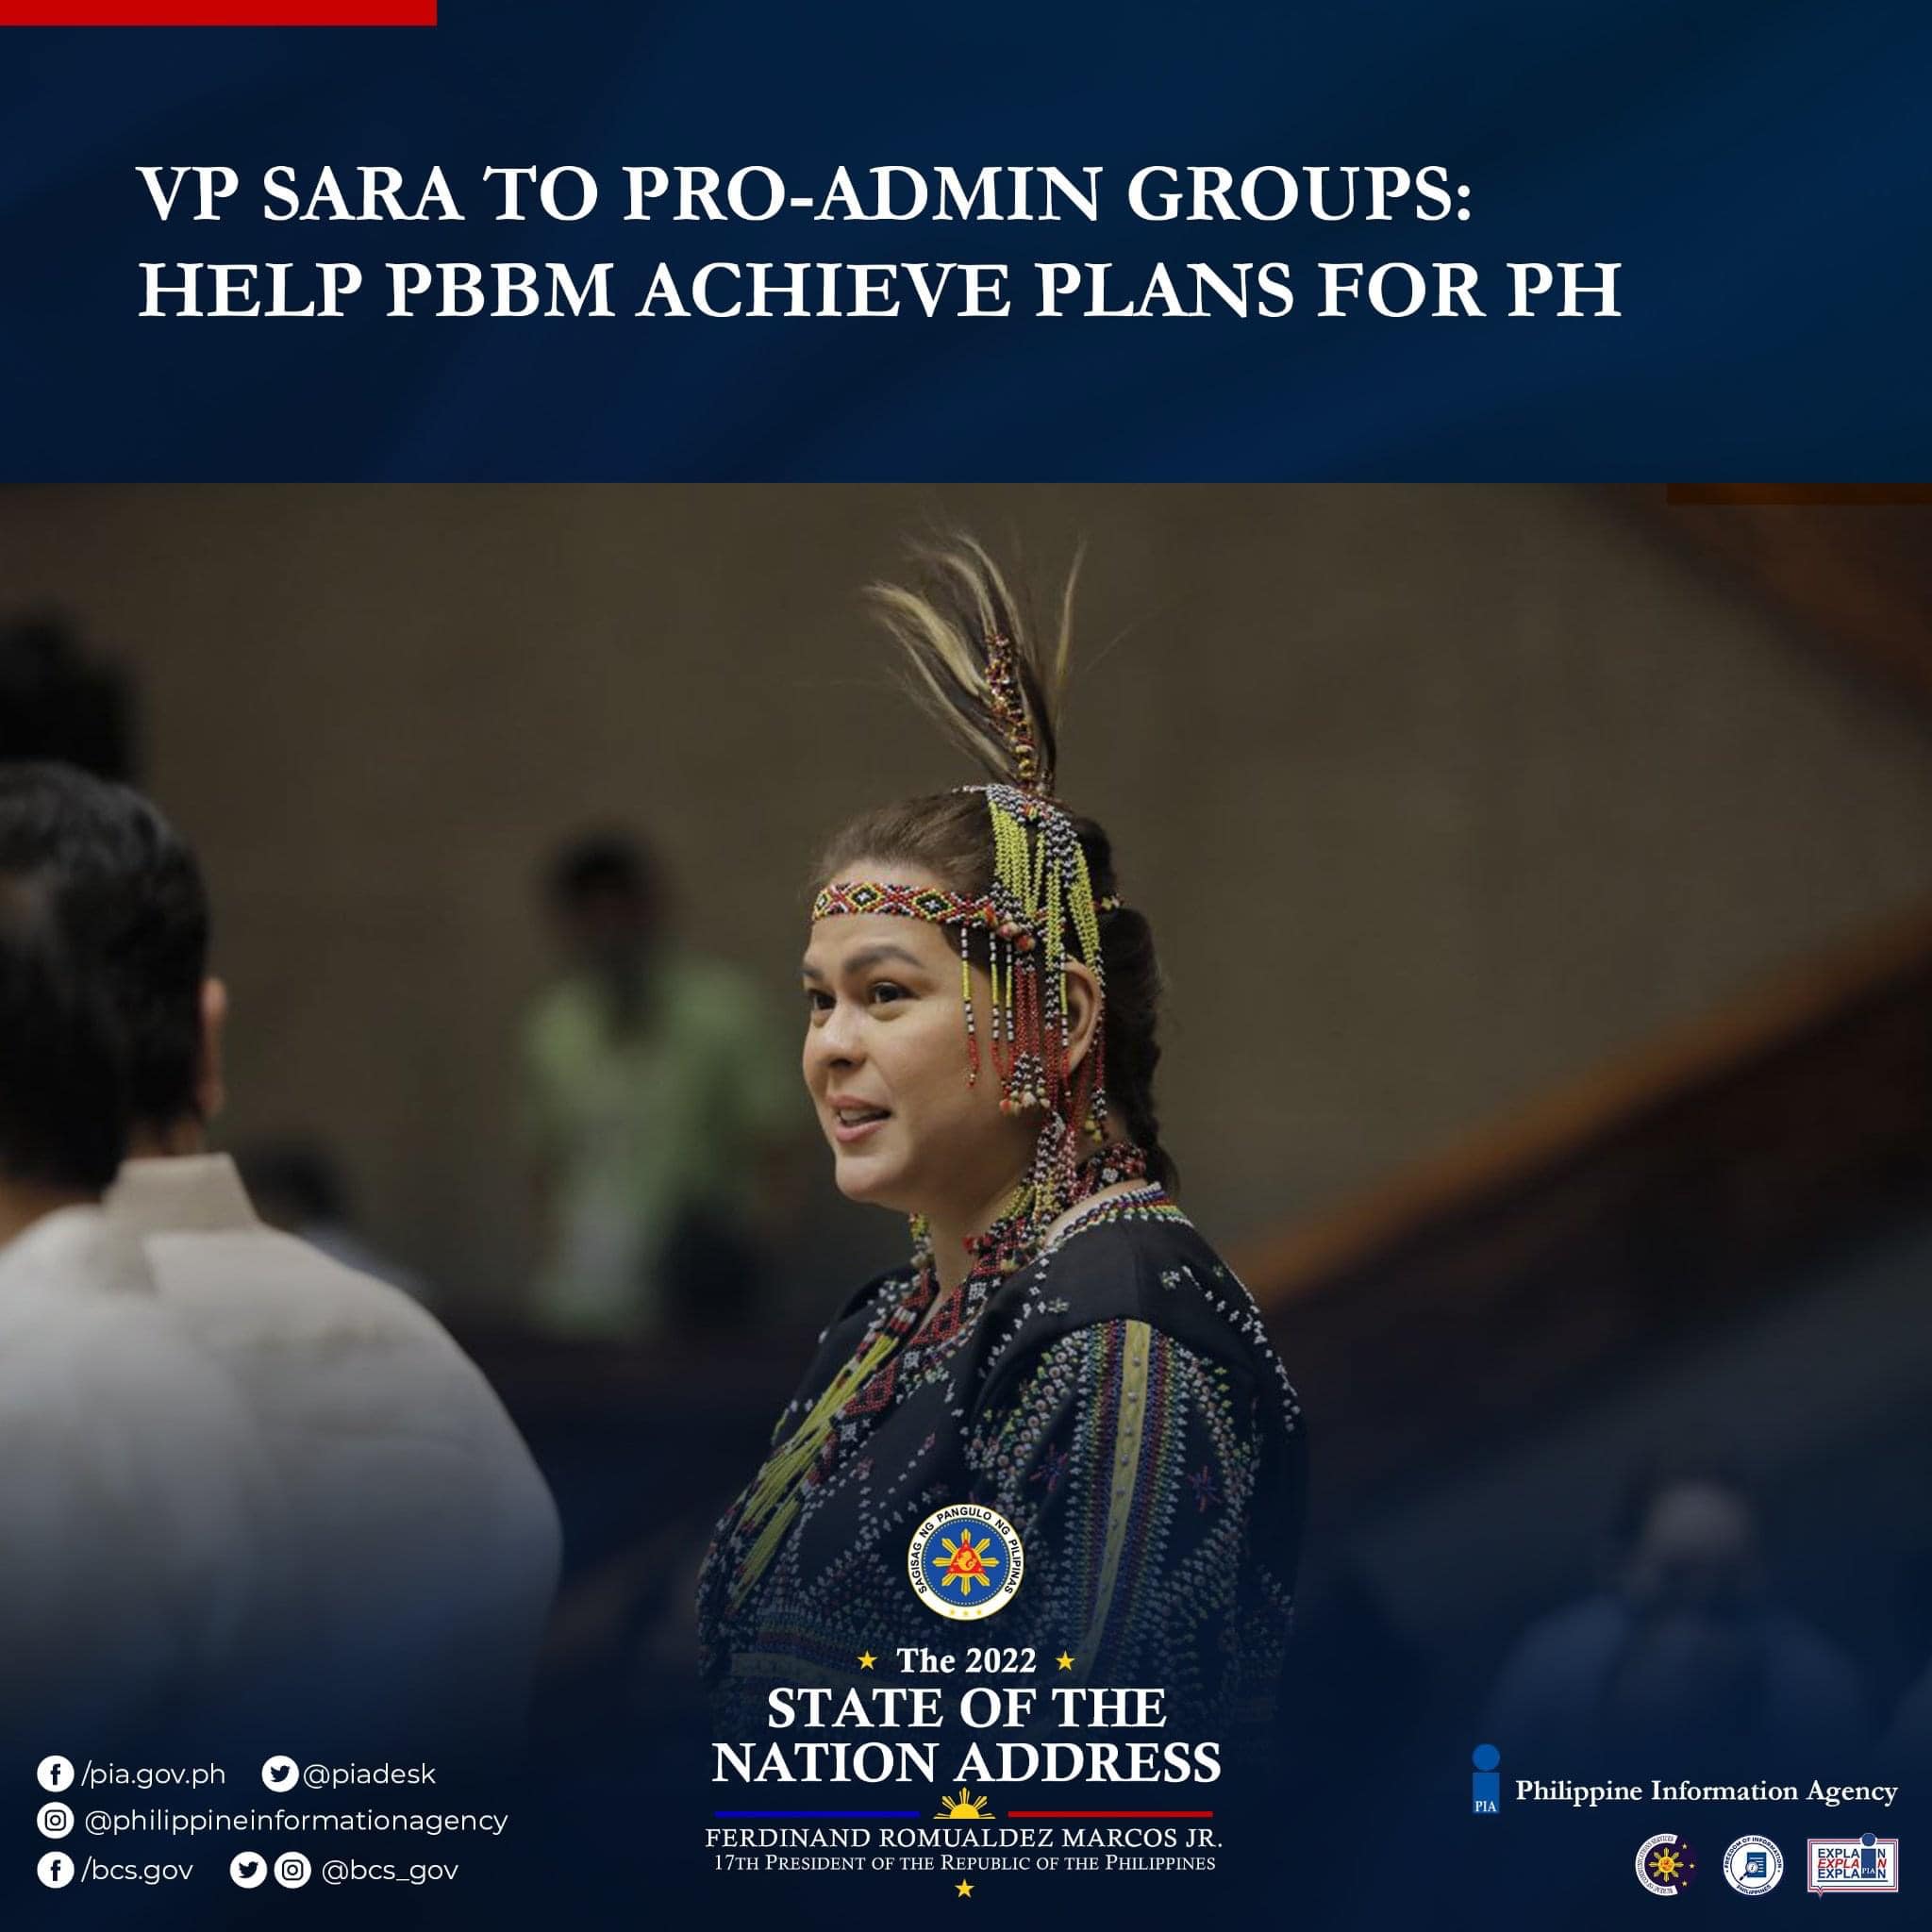 VP Sara to Pro-Admin Groups: Help PBBM achieve plans for PH